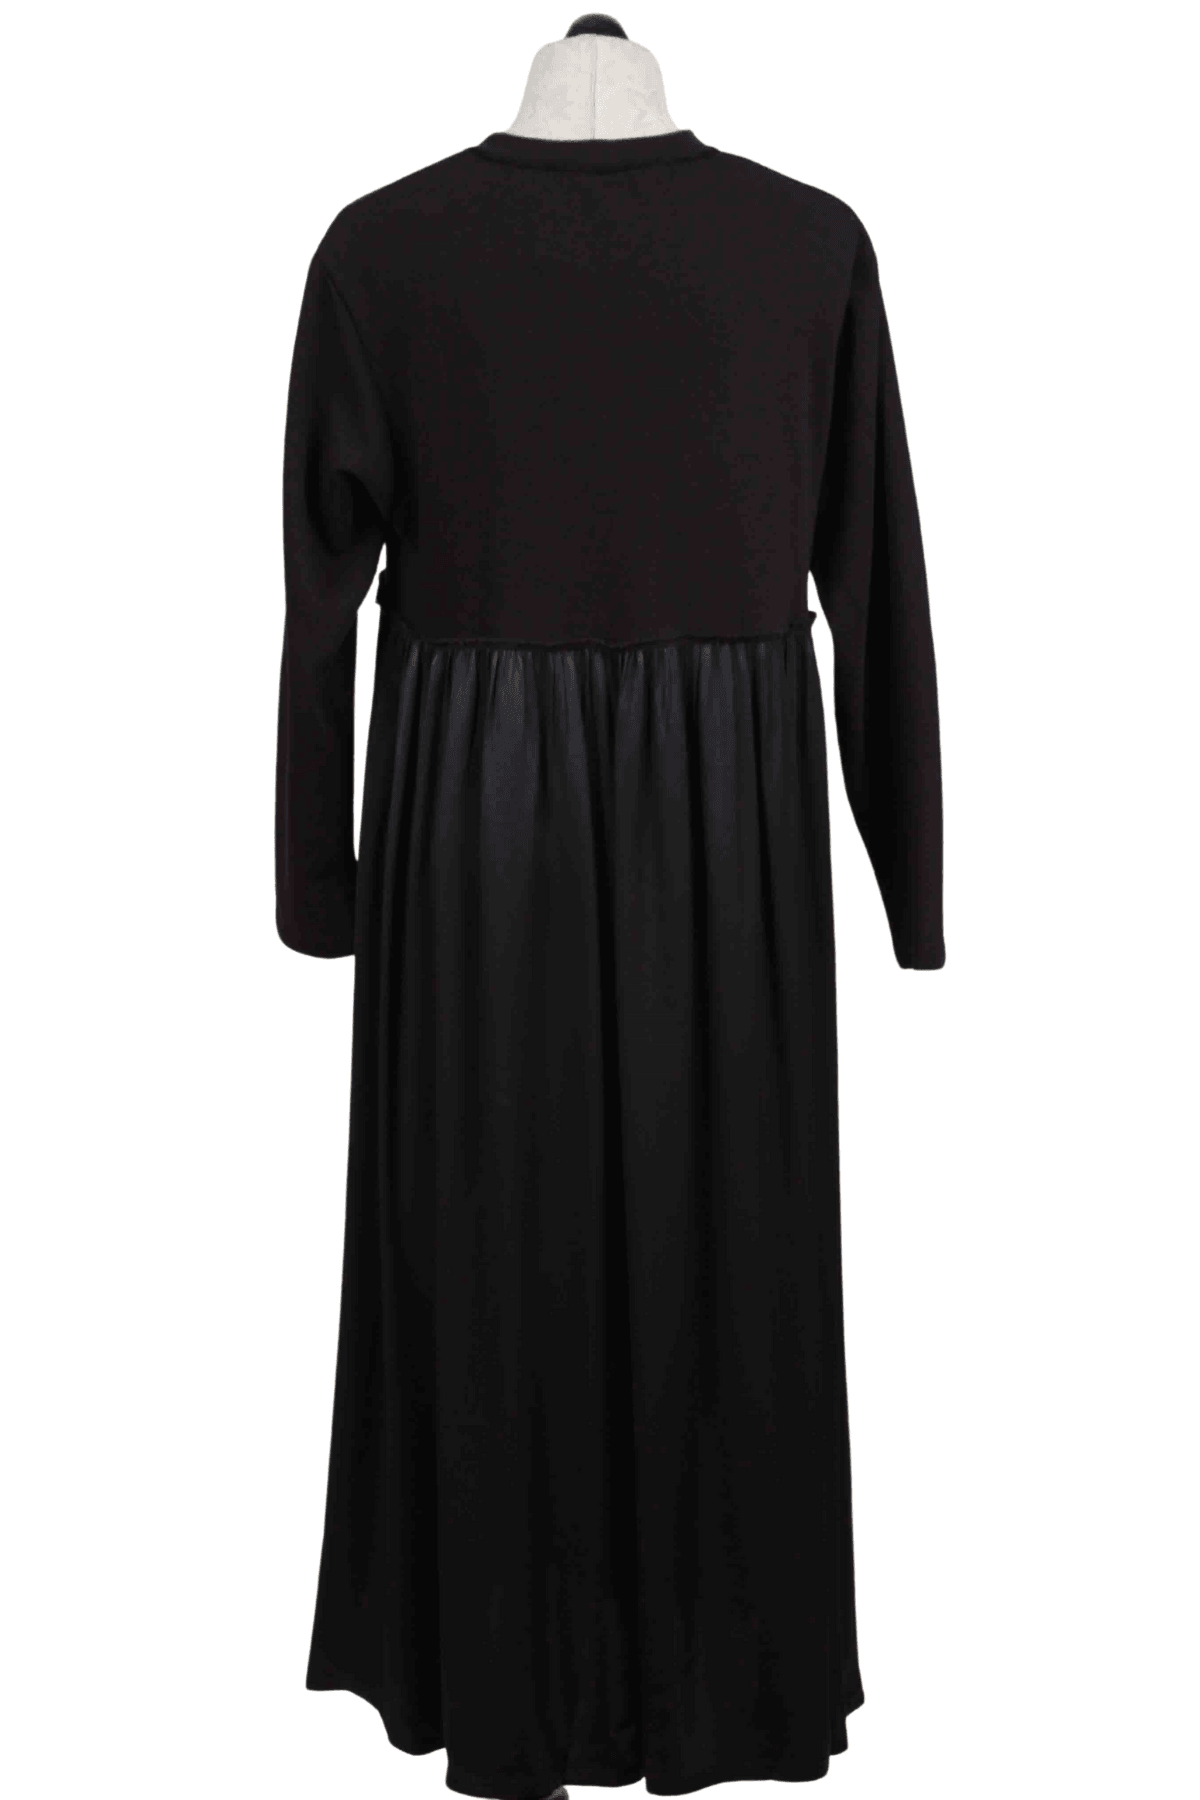 back view of black Long Sleeve Satin Bottom Dress by Alembika